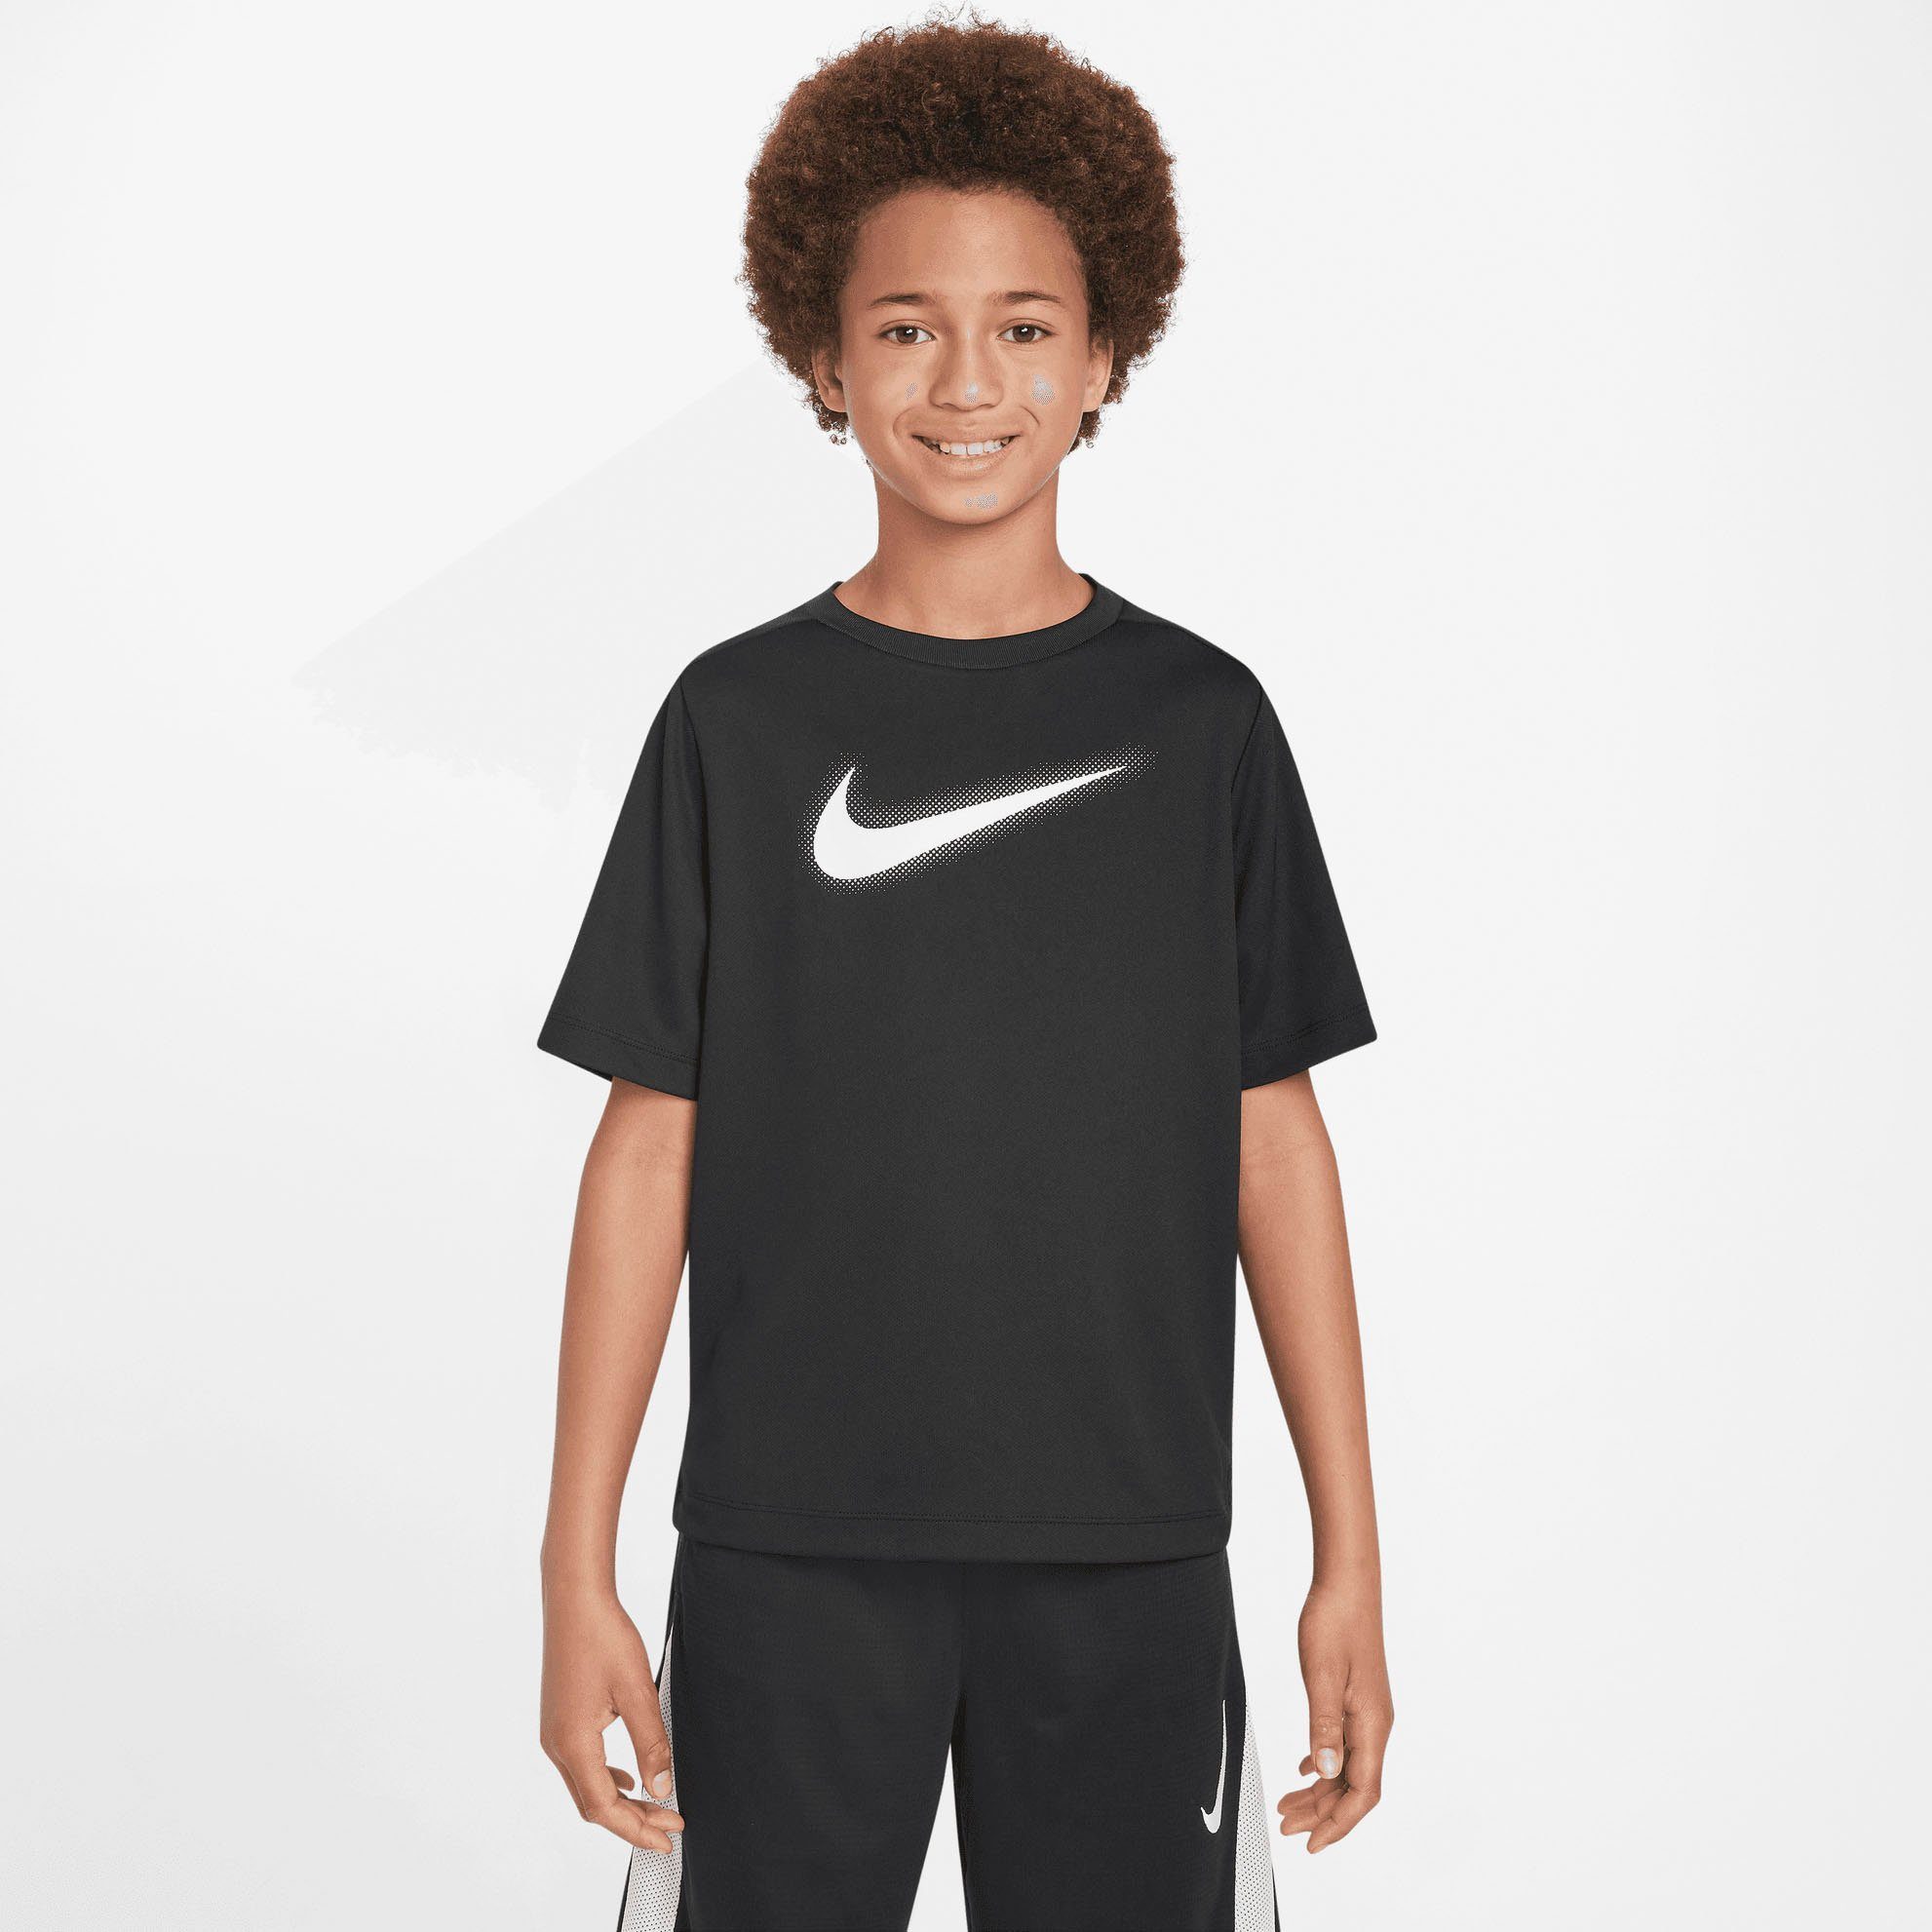 BIG TRAINING GRAPHIC KIDS' (BOYS) MULTI+ TOP DRI-FIT Nike BLACK/WHITE Trainingsshirt